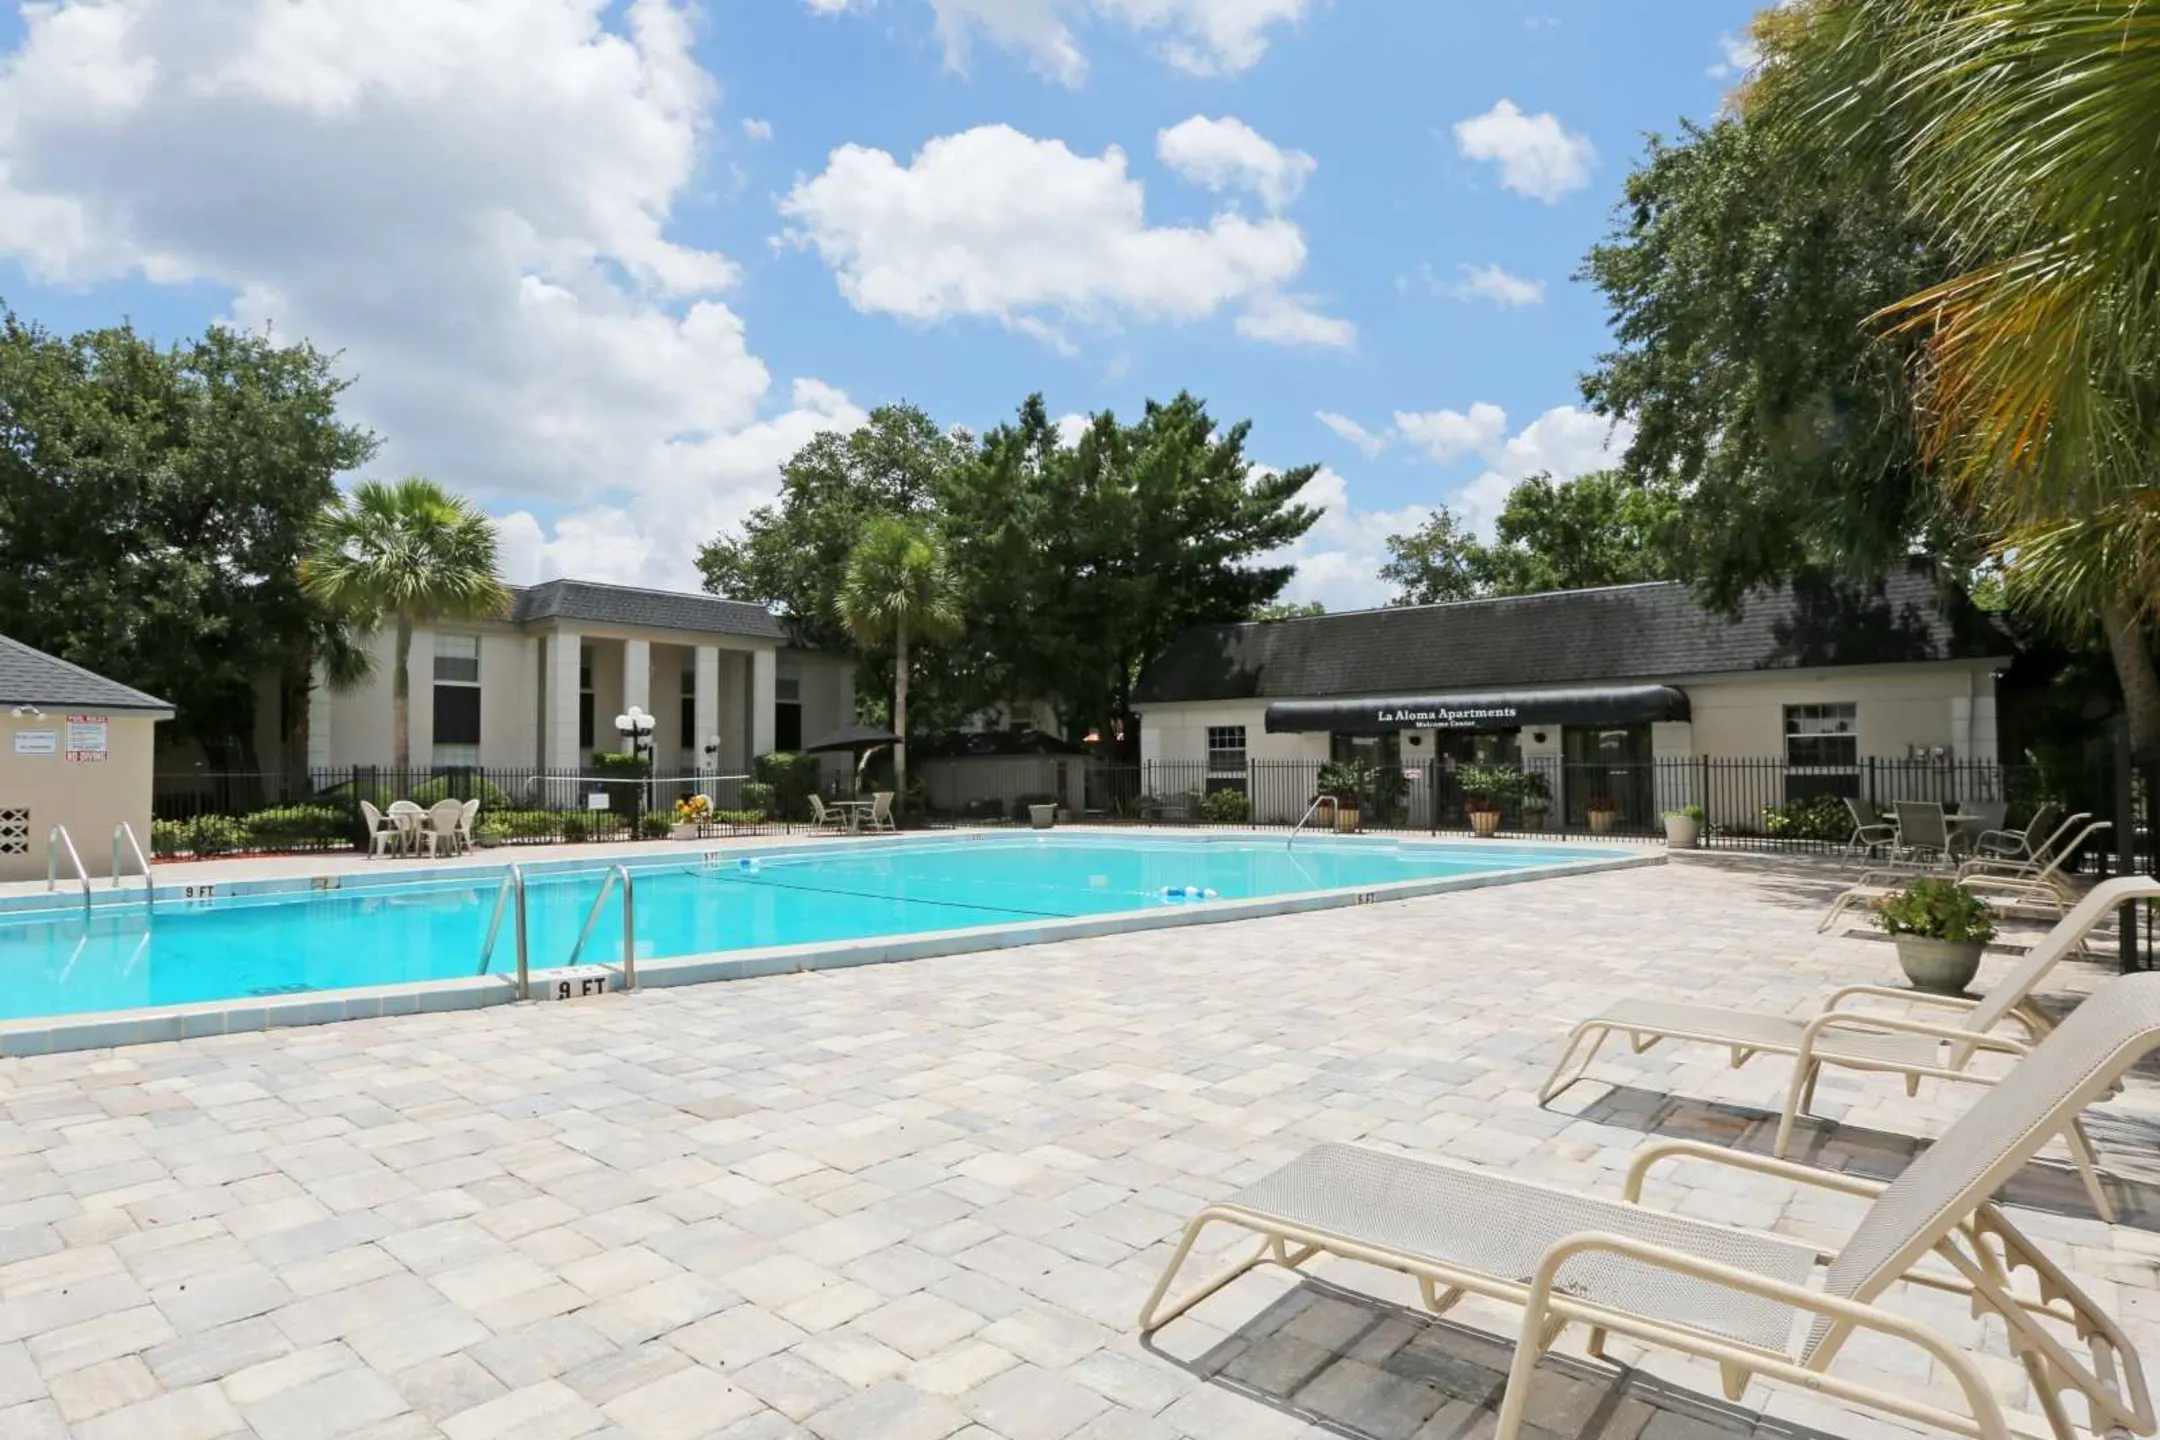 Pool - La Aloma Apartments - Winter Park, FL